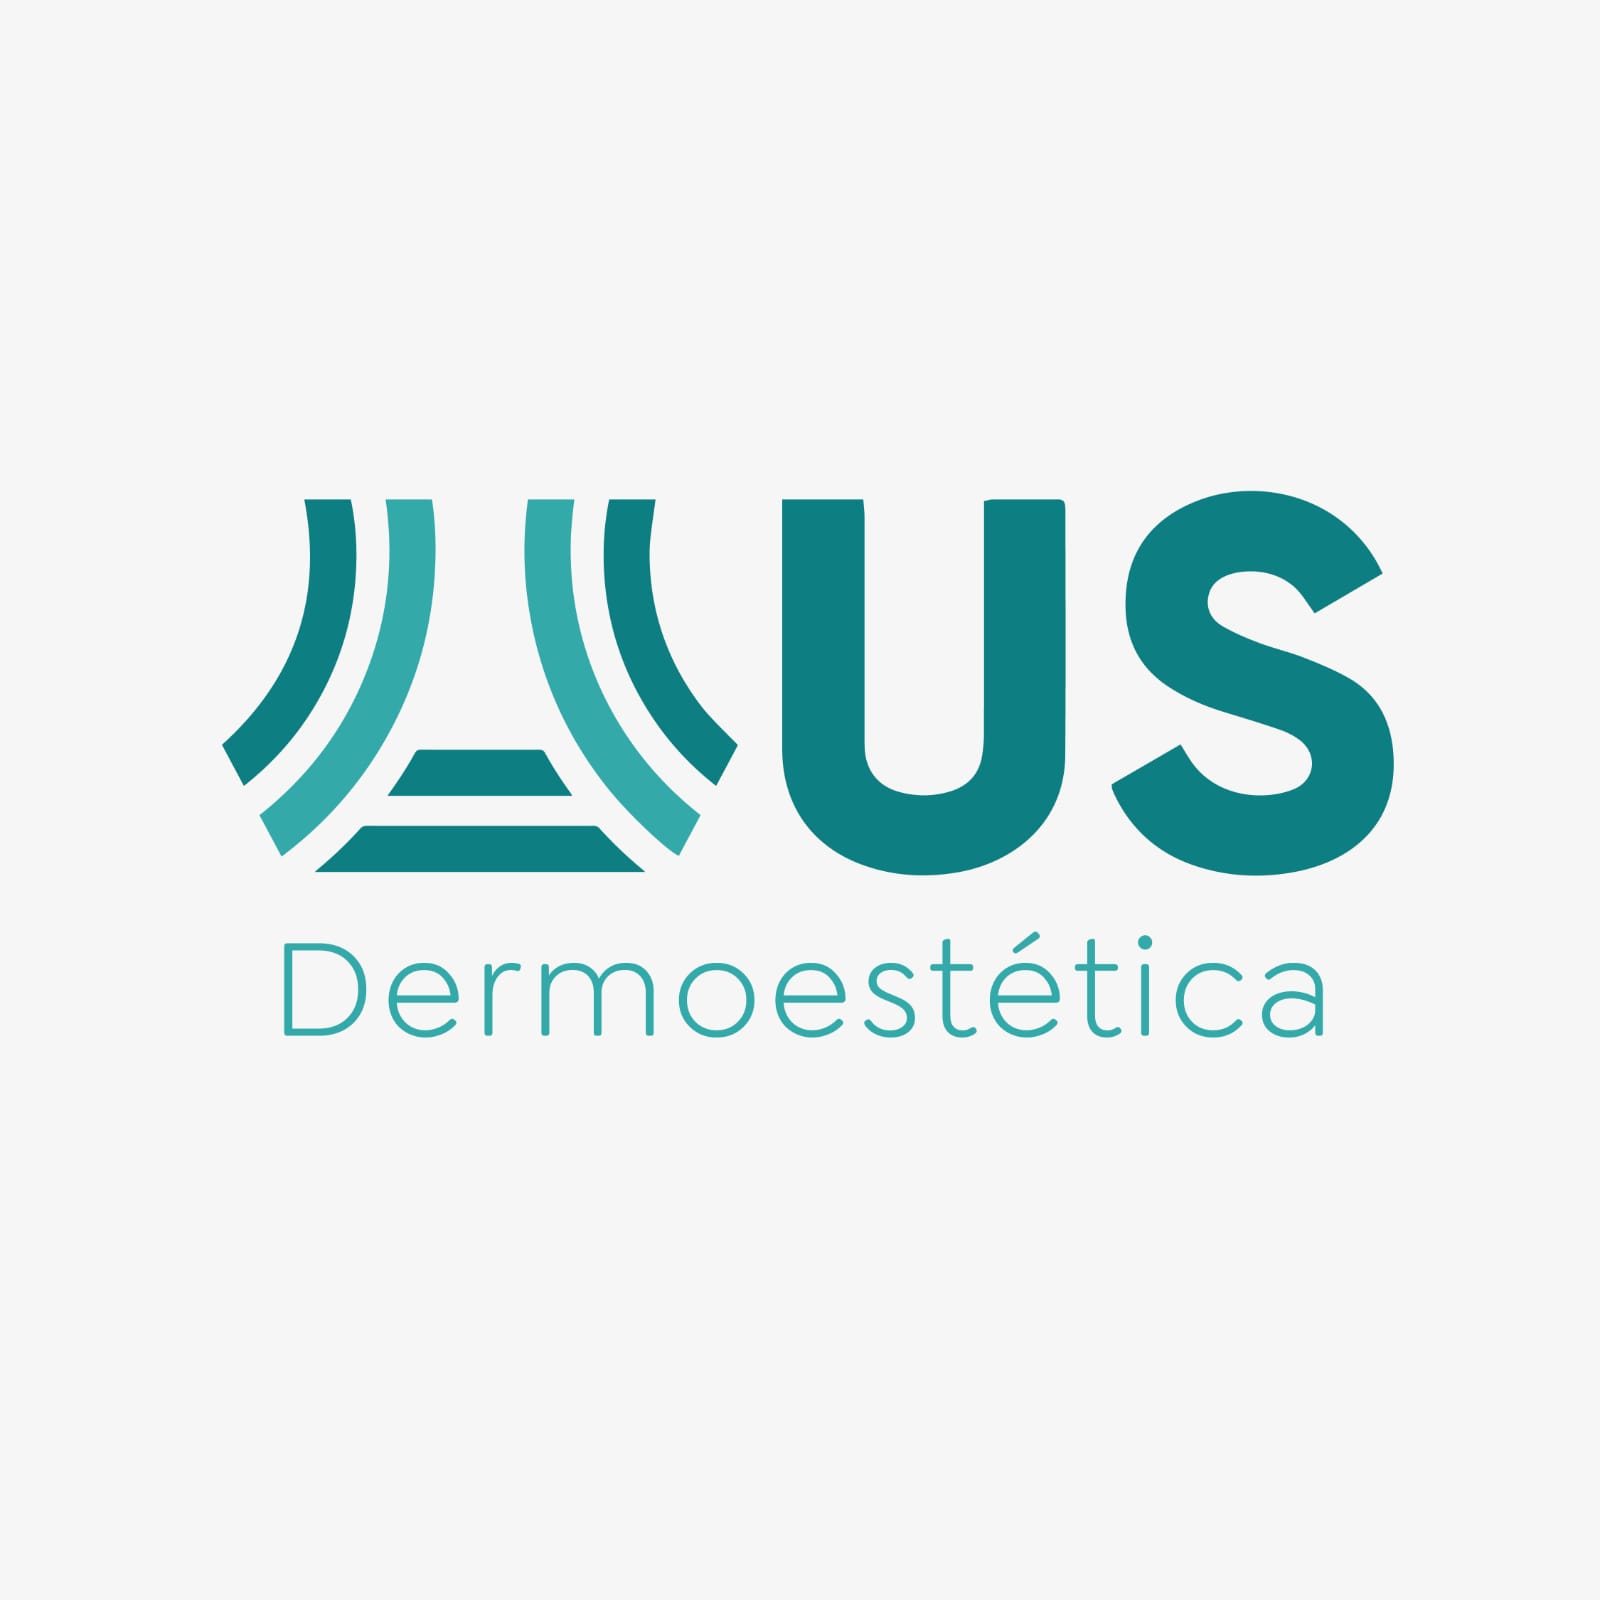 US Dermoestética Logo